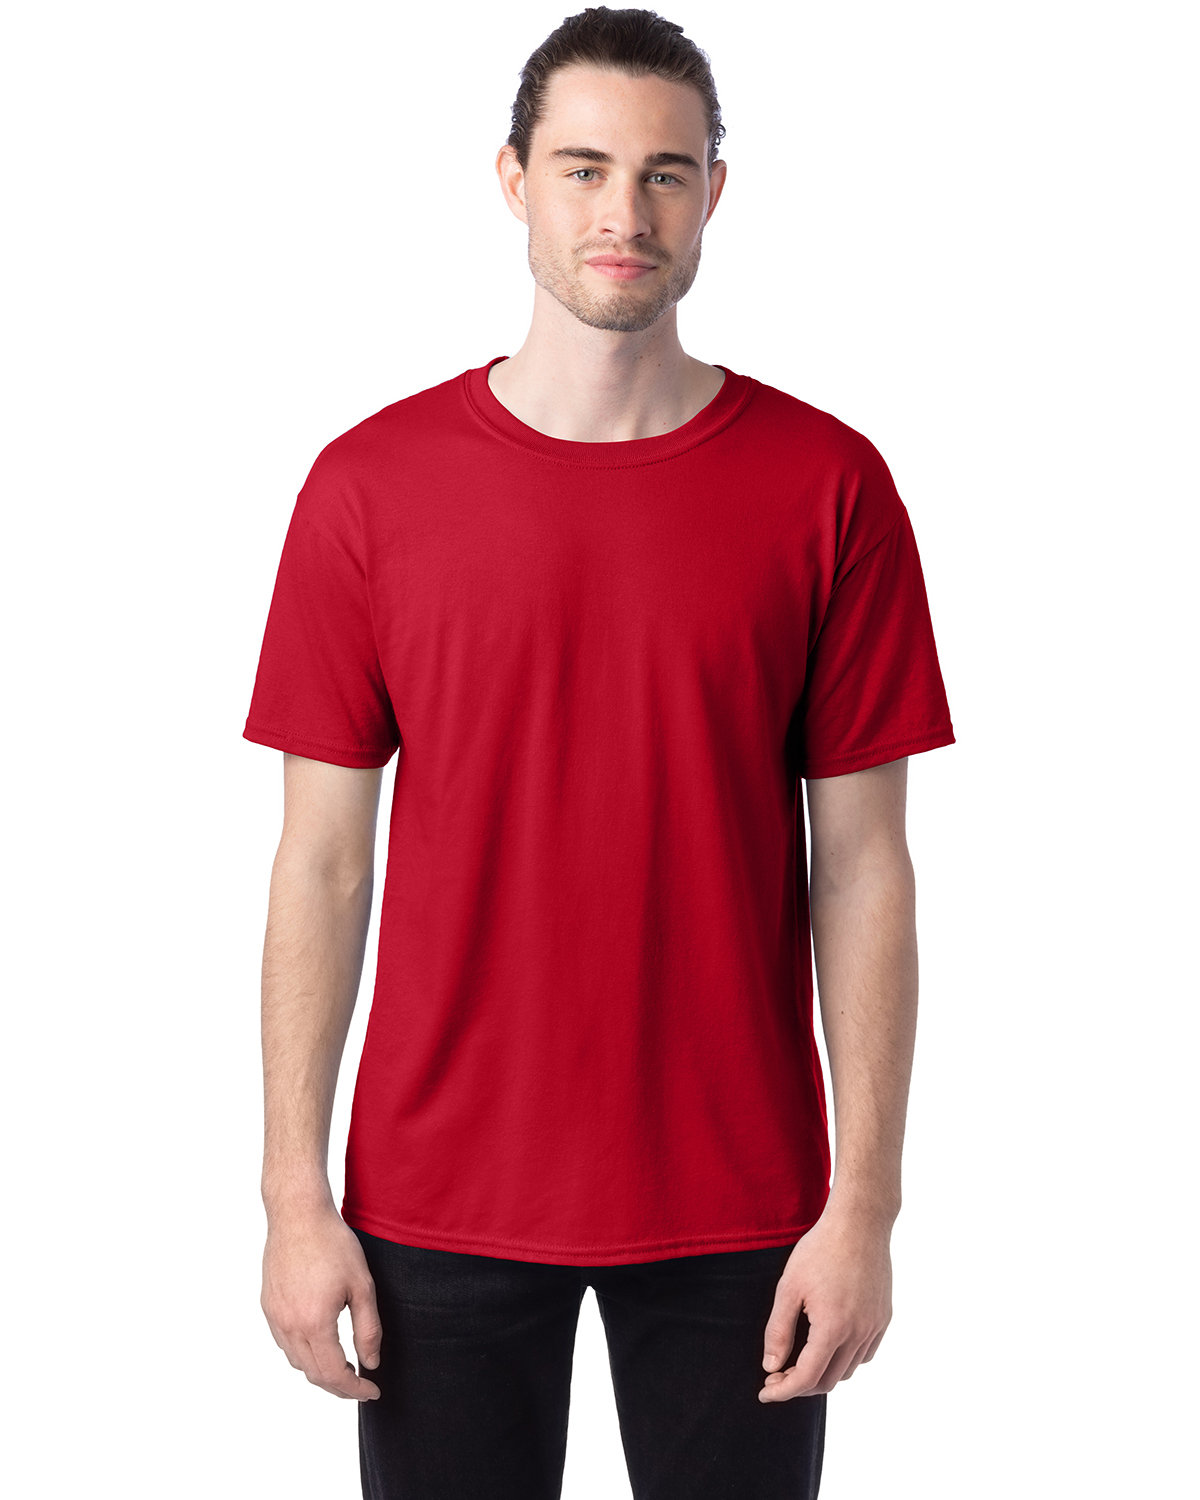 Hanes Unisex 50/50 T-Shirt DEEP RED 